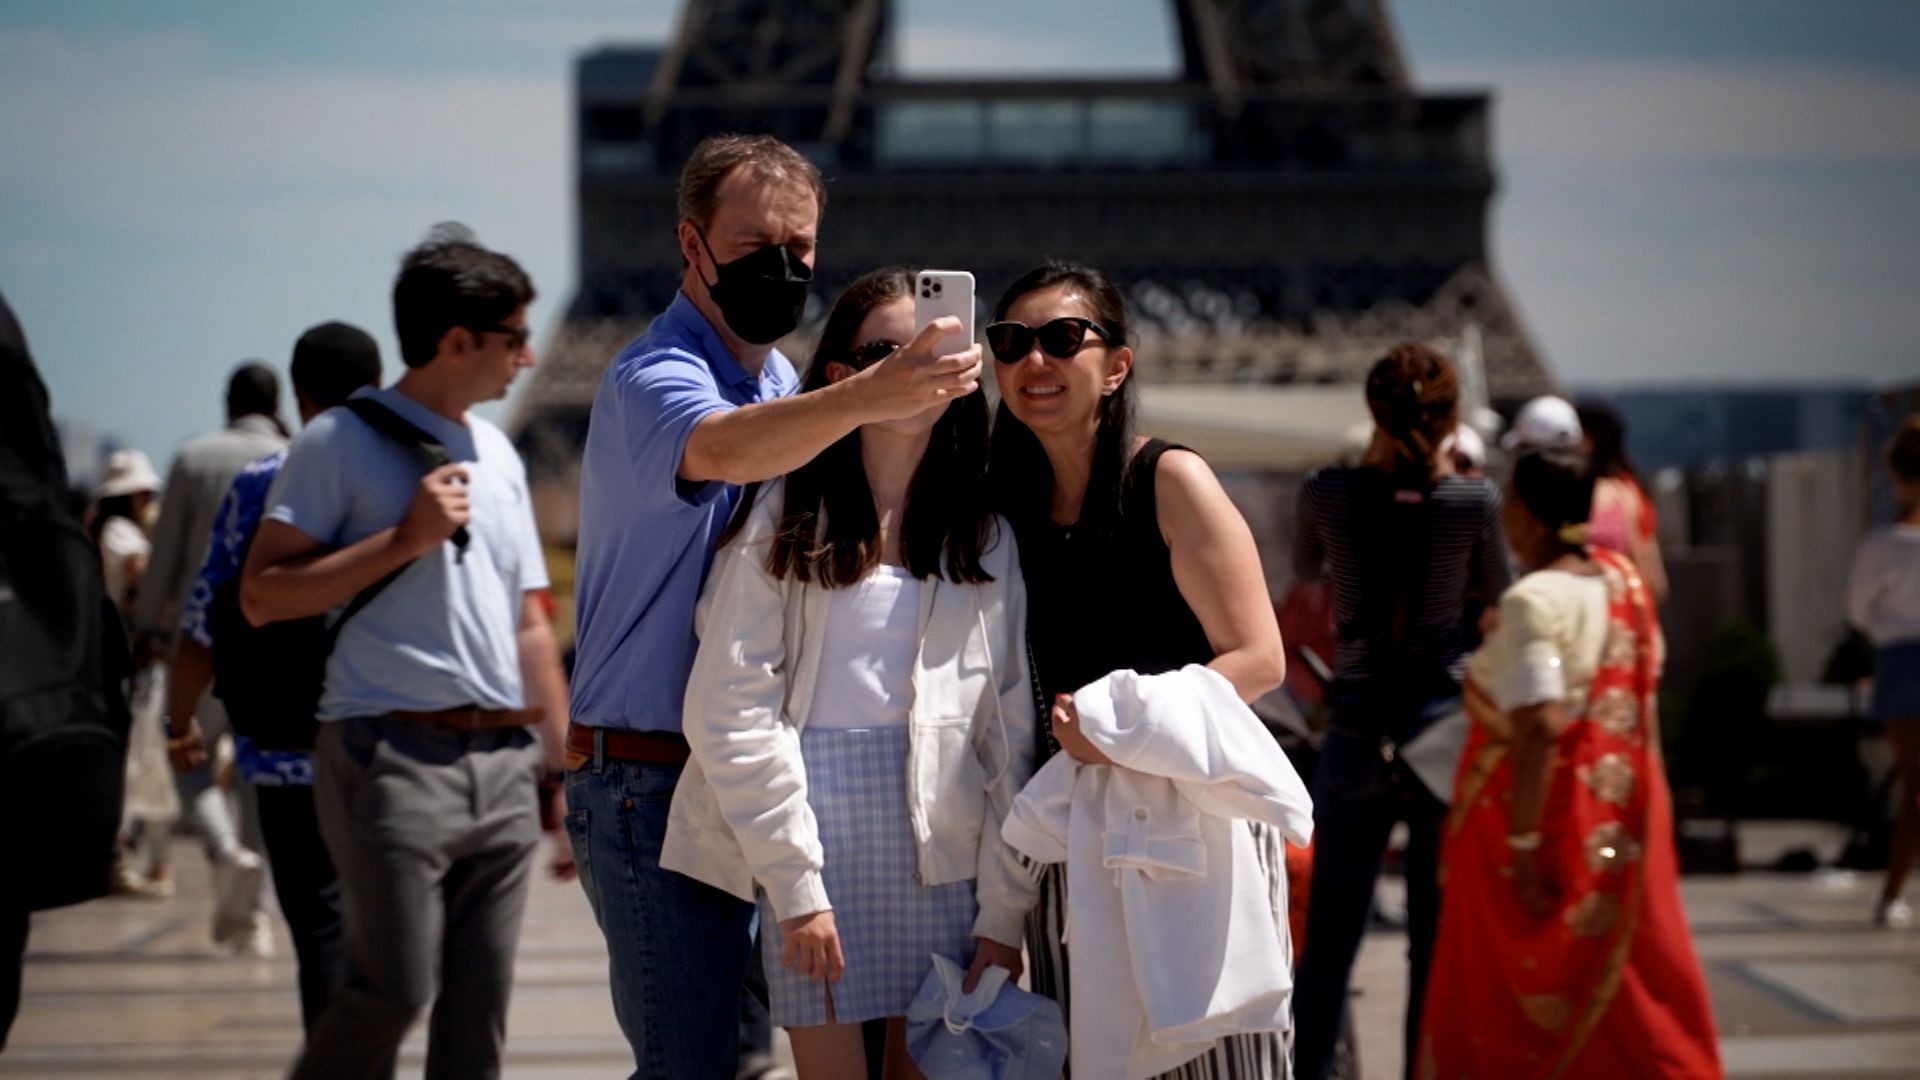 French pharmacies become latest TikTok travel trend among American tourists